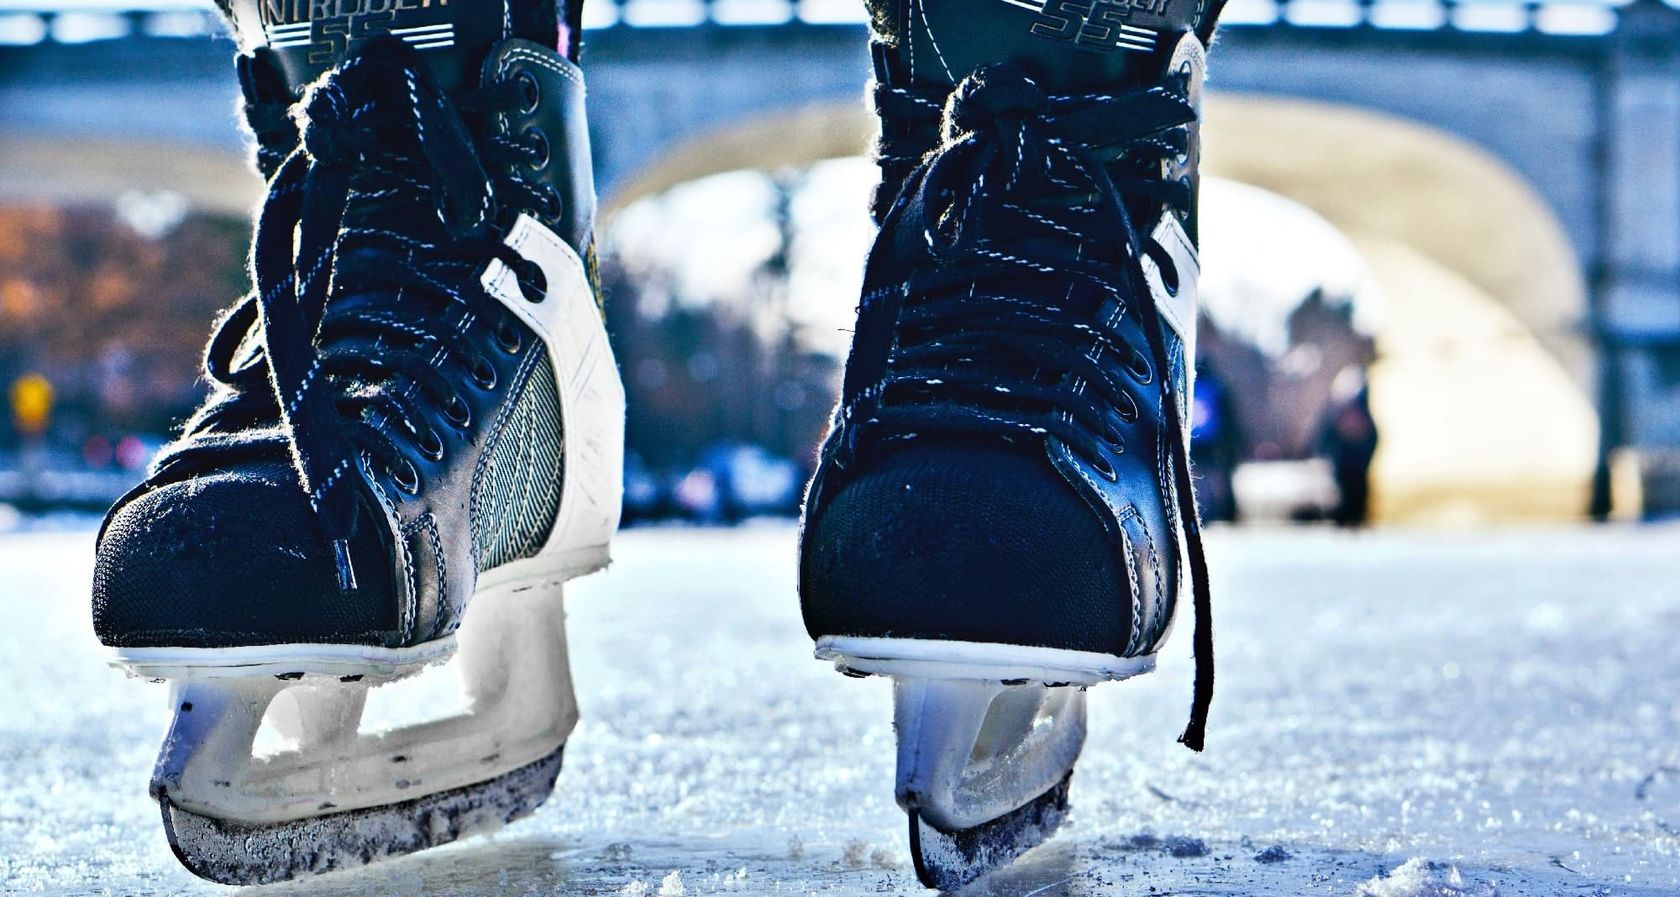 Steel Hockey Skates: Skating Towards Victory